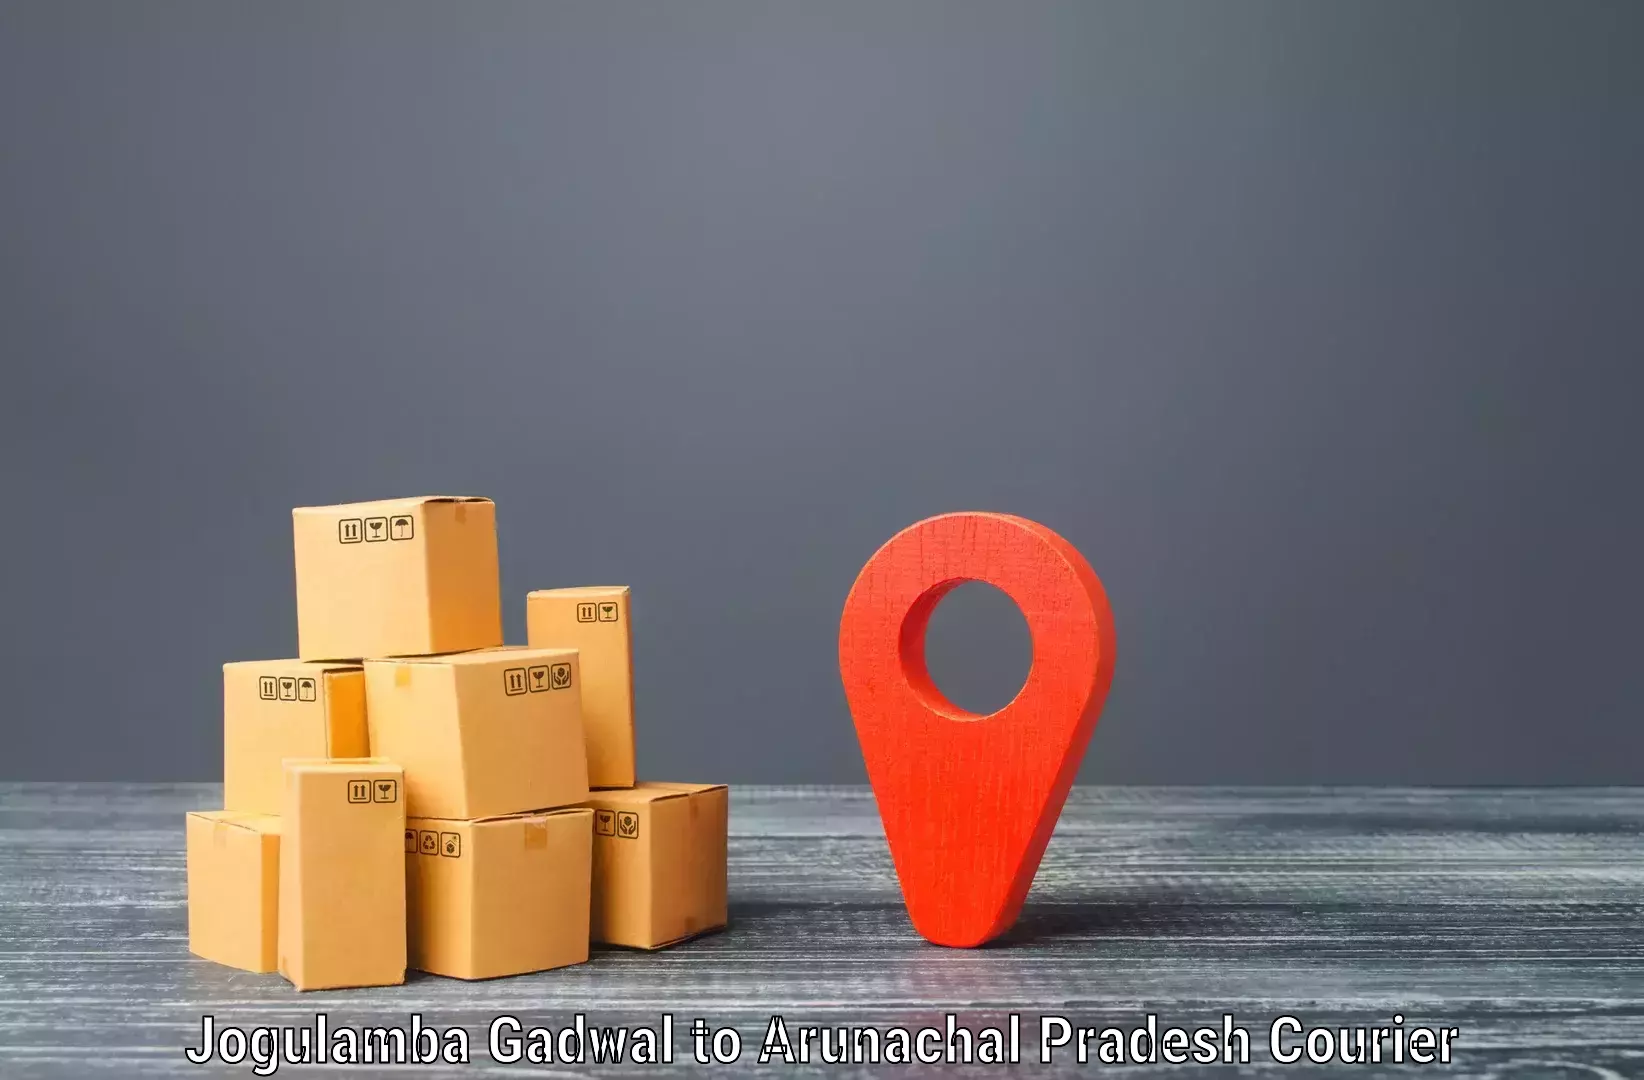 Package delivery network Jogulamba Gadwal to Nirjuli